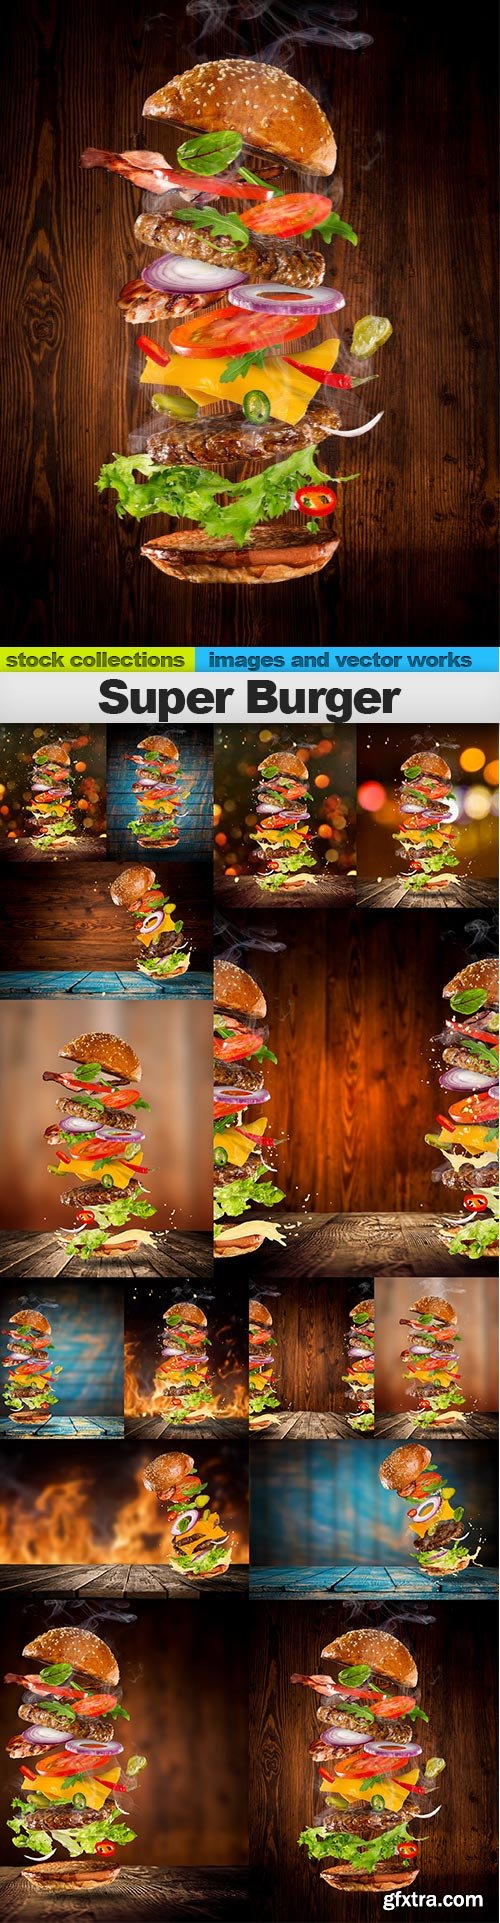 Super Burger, 15 x UHQ JPEG